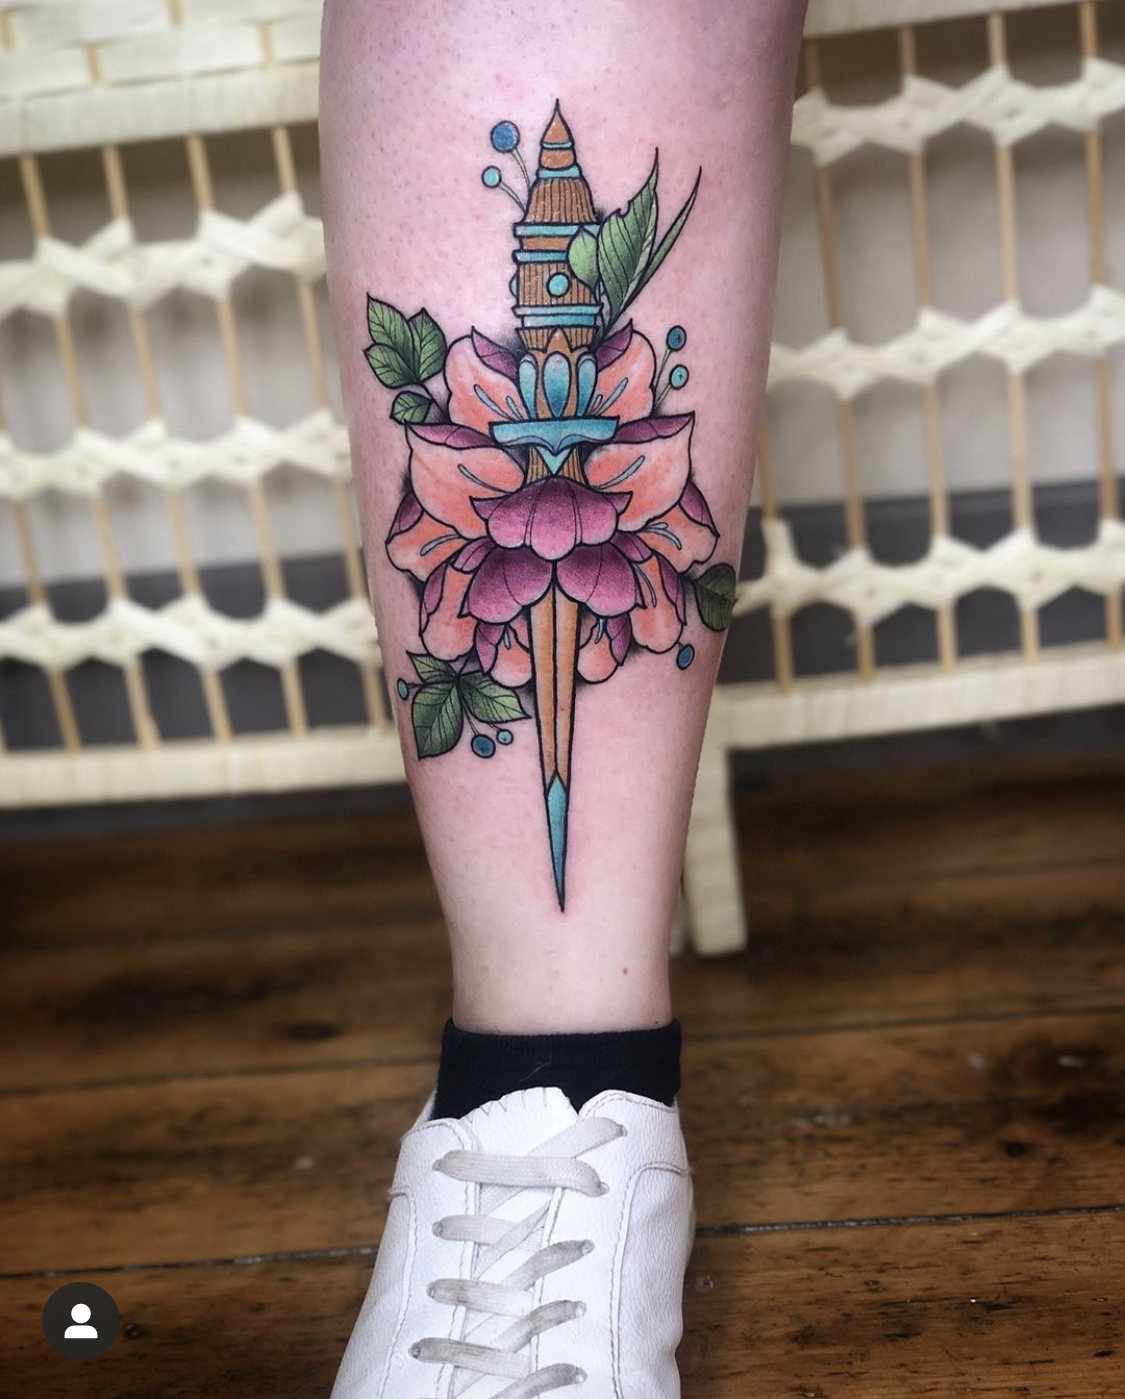 Shin tattoo by Shannon Parrott